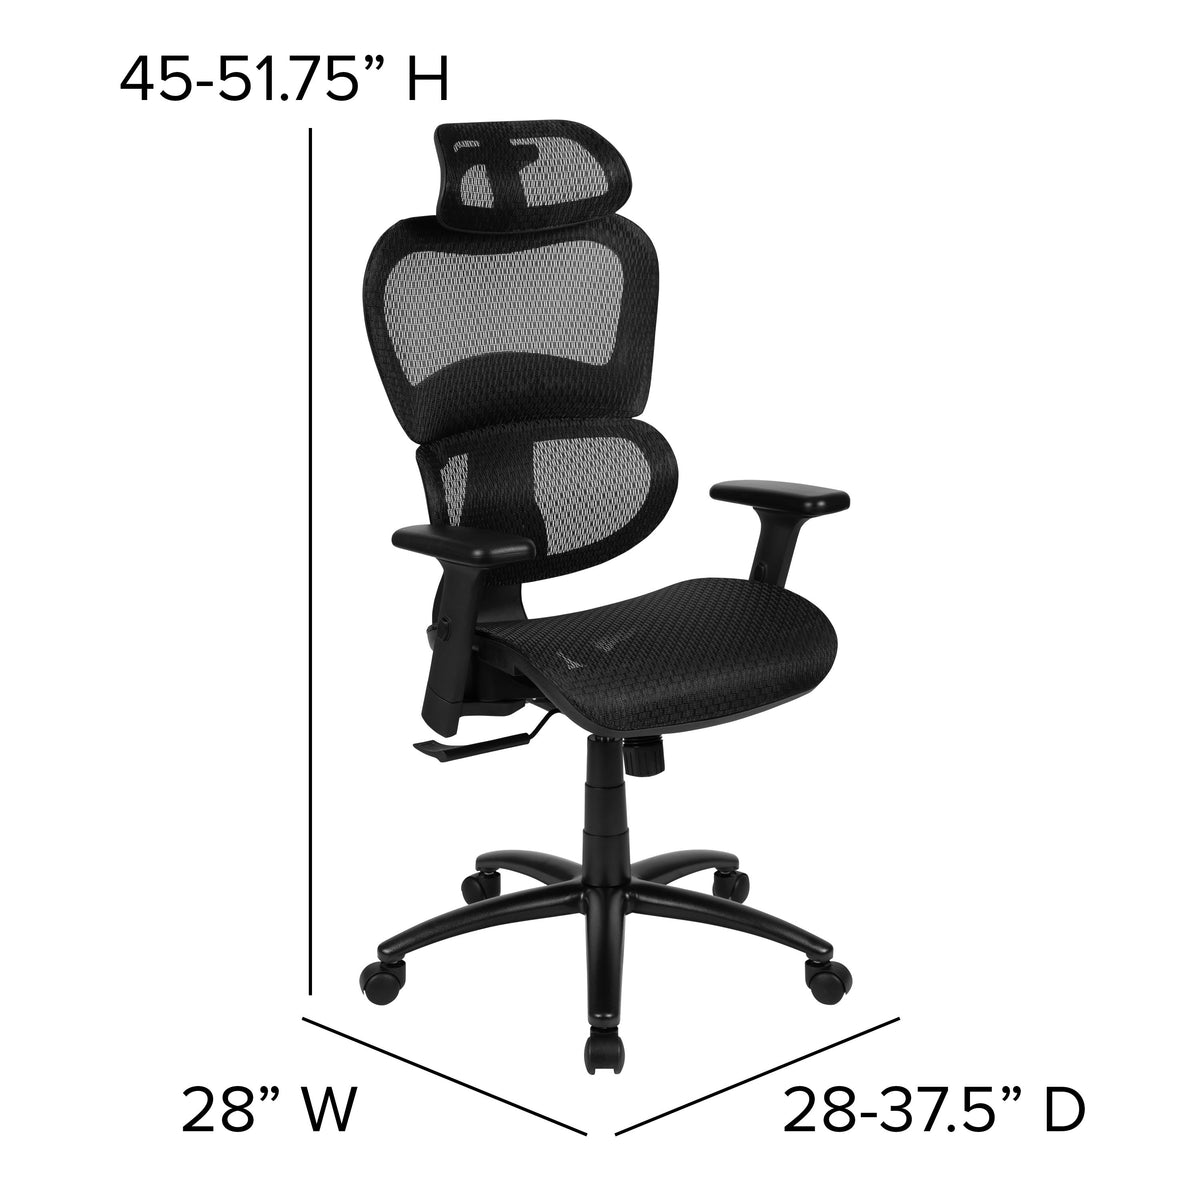 Black |#| Ergonomic Black Mesh Office Chair-Synchro-Tilt, Headrest, Adjustable Pivot Arms